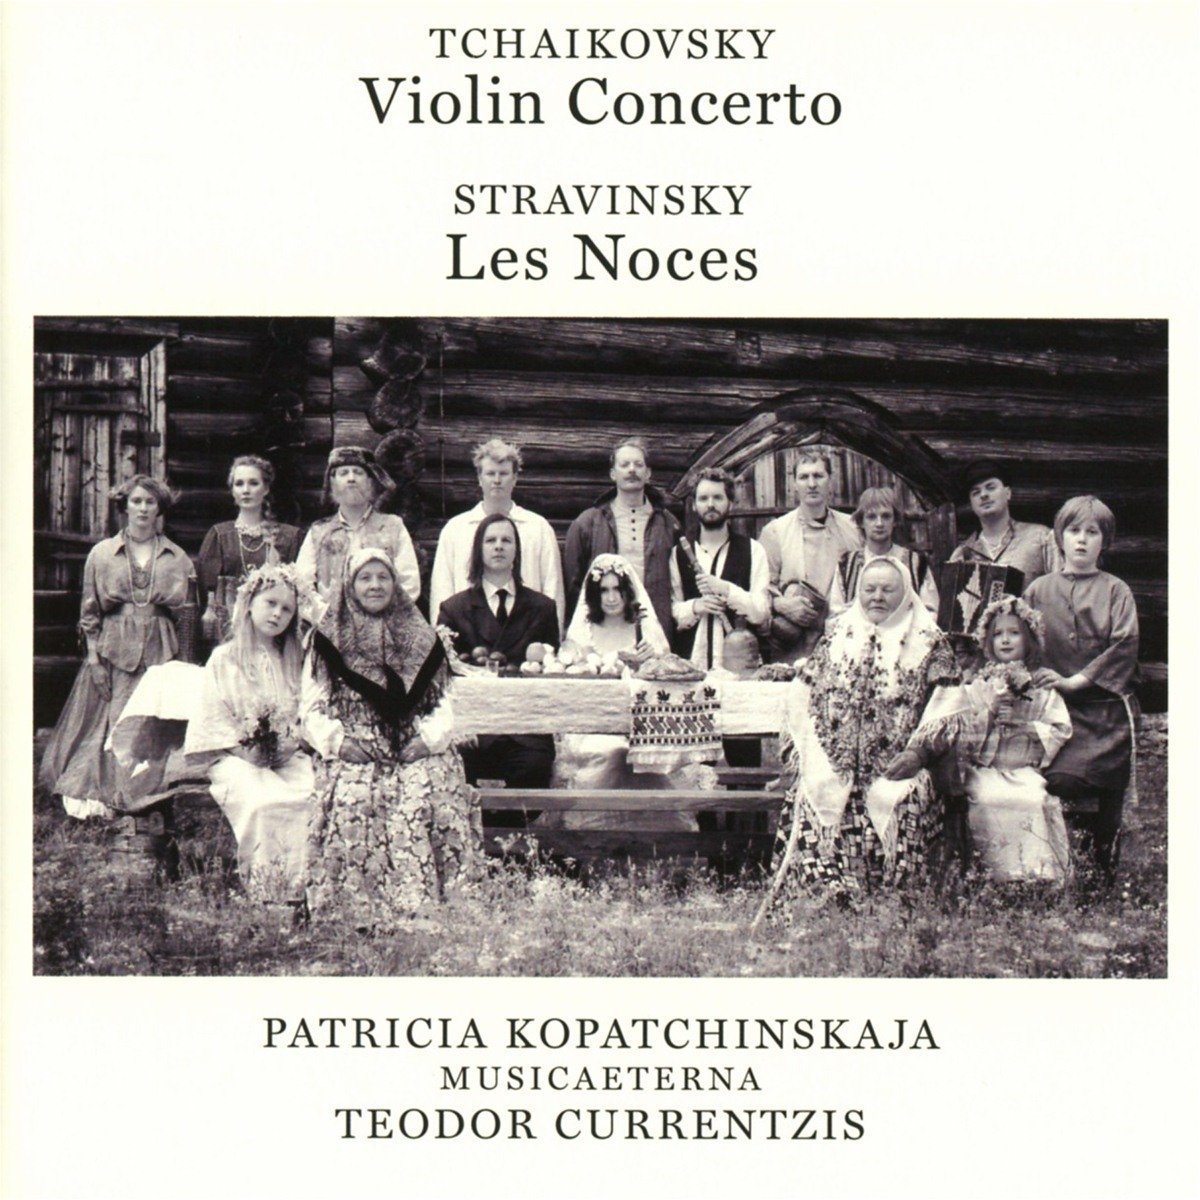 Violin Concerto, Les Noces | Teodor Currentzis carturesti.ro poza noua